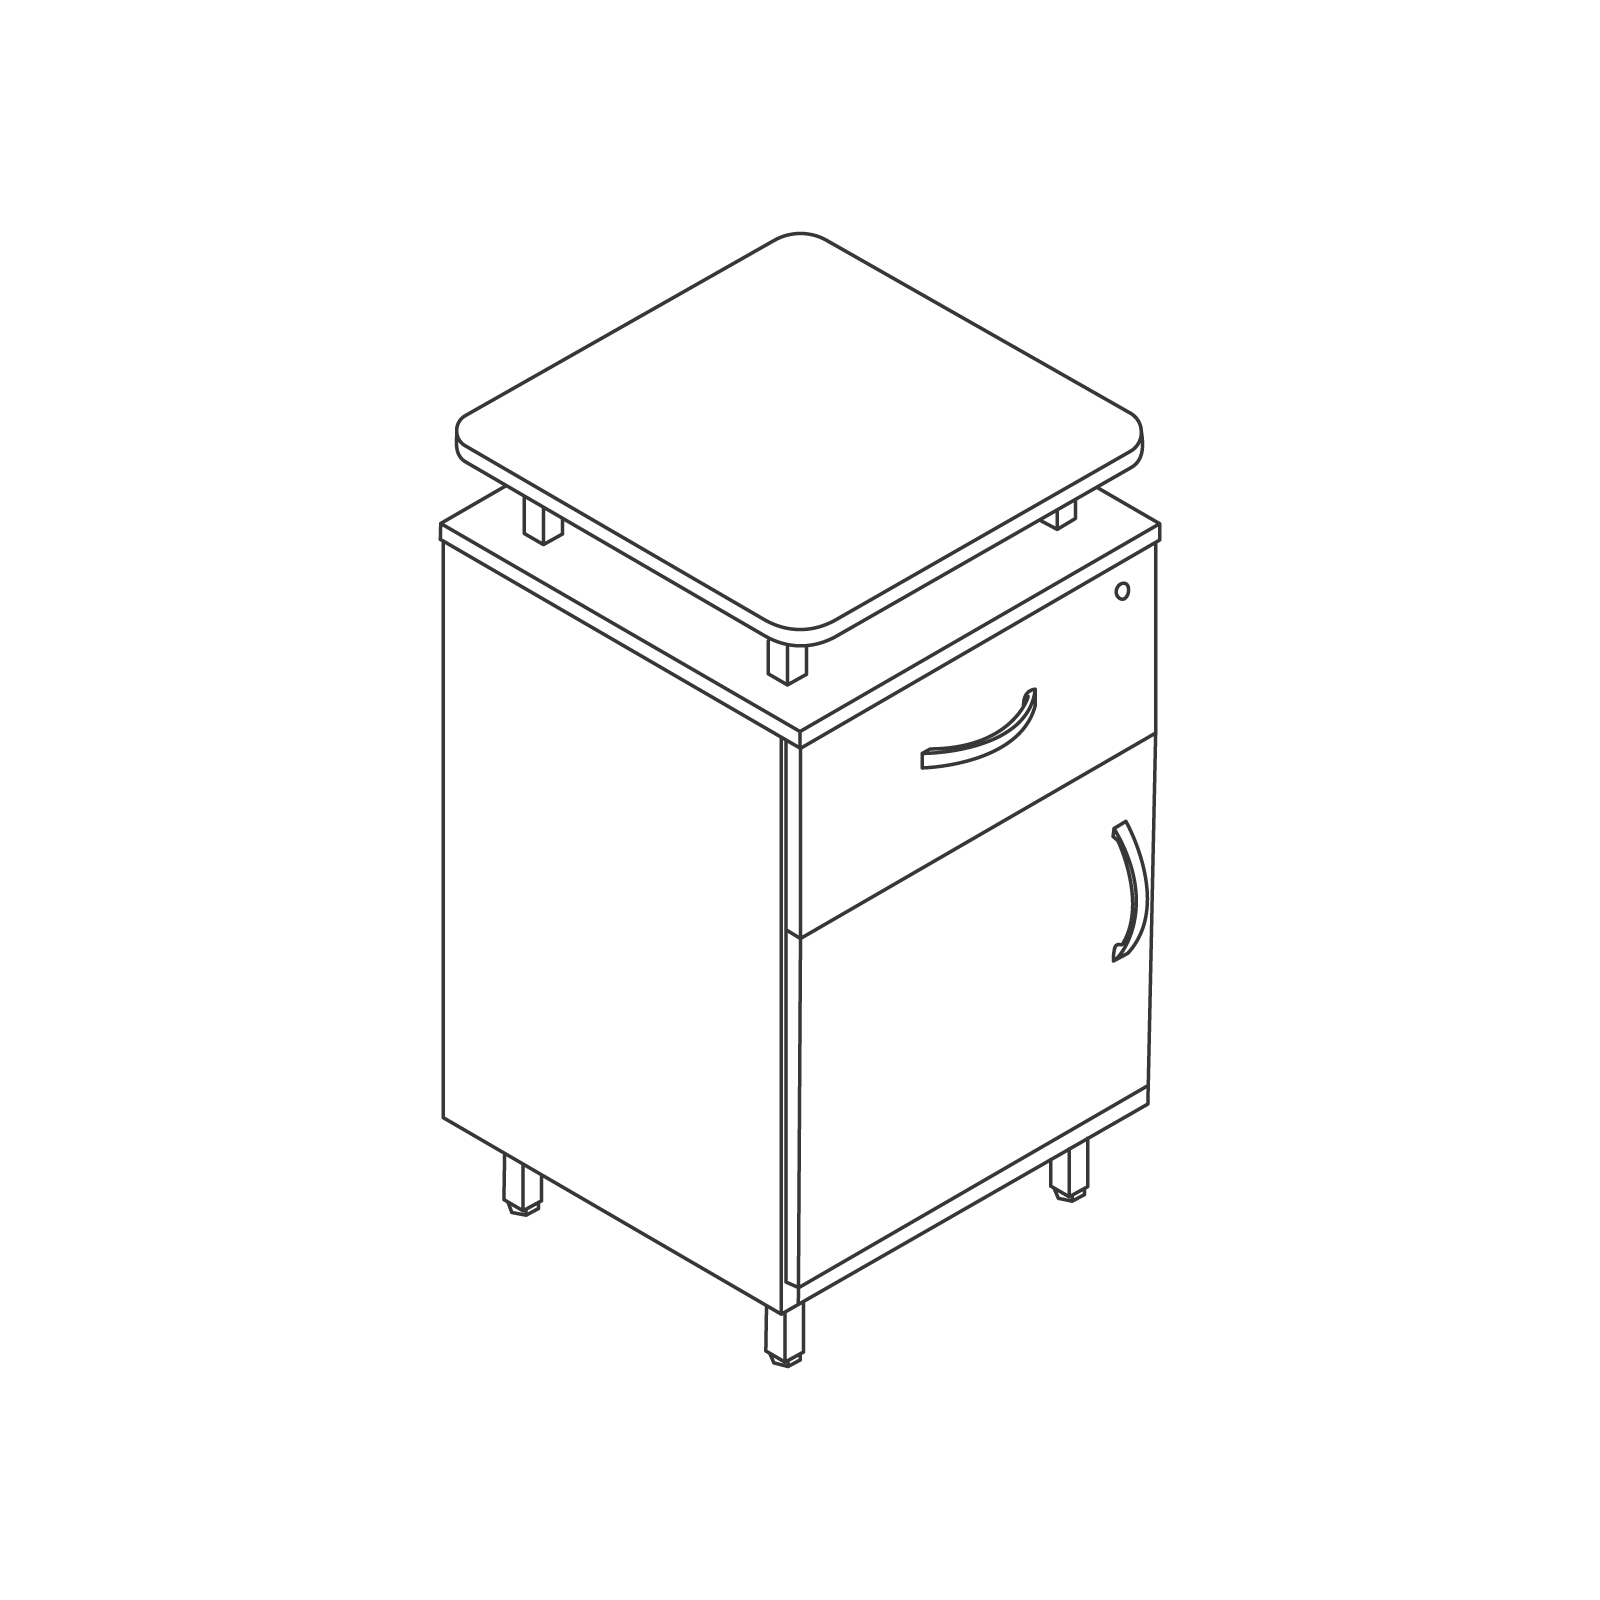 A line drawing - Nemschoff Bedside Cabinet–Raised Top–Metal Legs